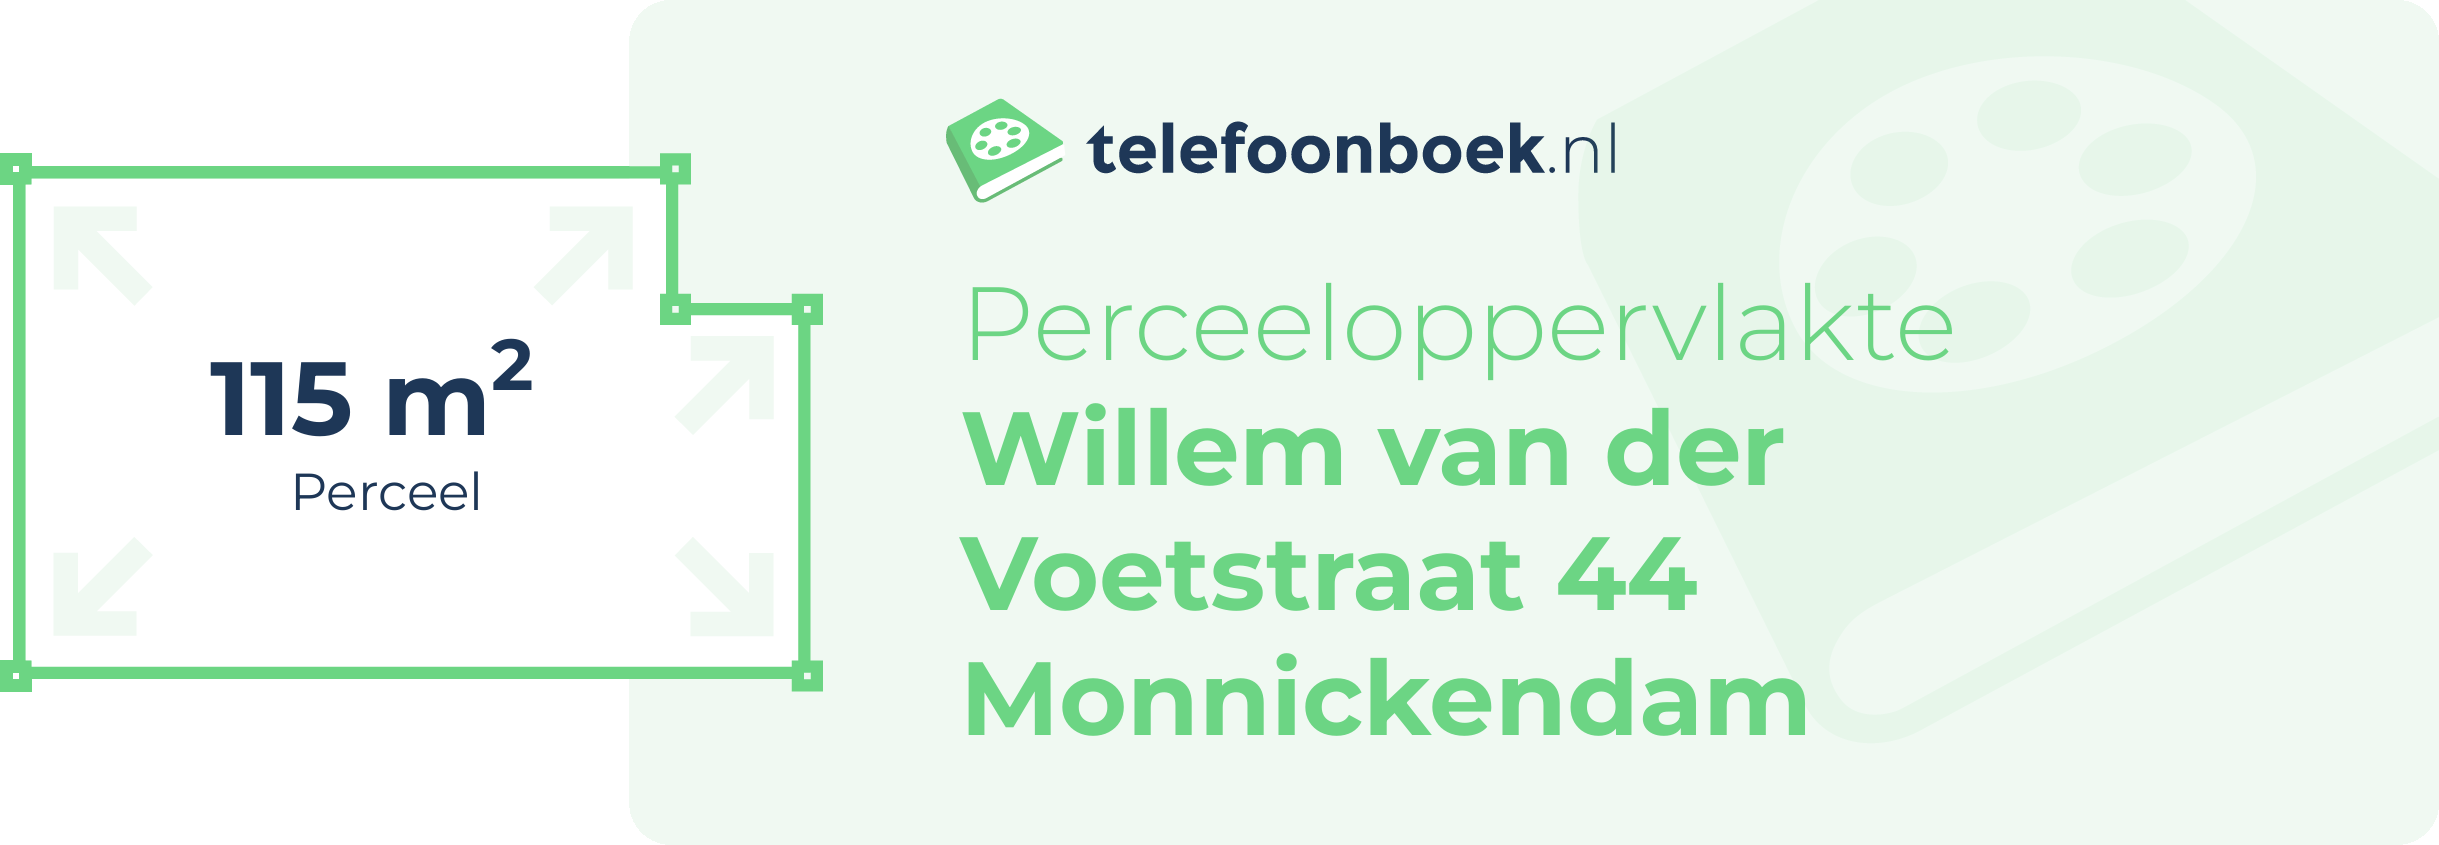 Perceeloppervlakte Willem Van Der Voetstraat 44 Monnickendam